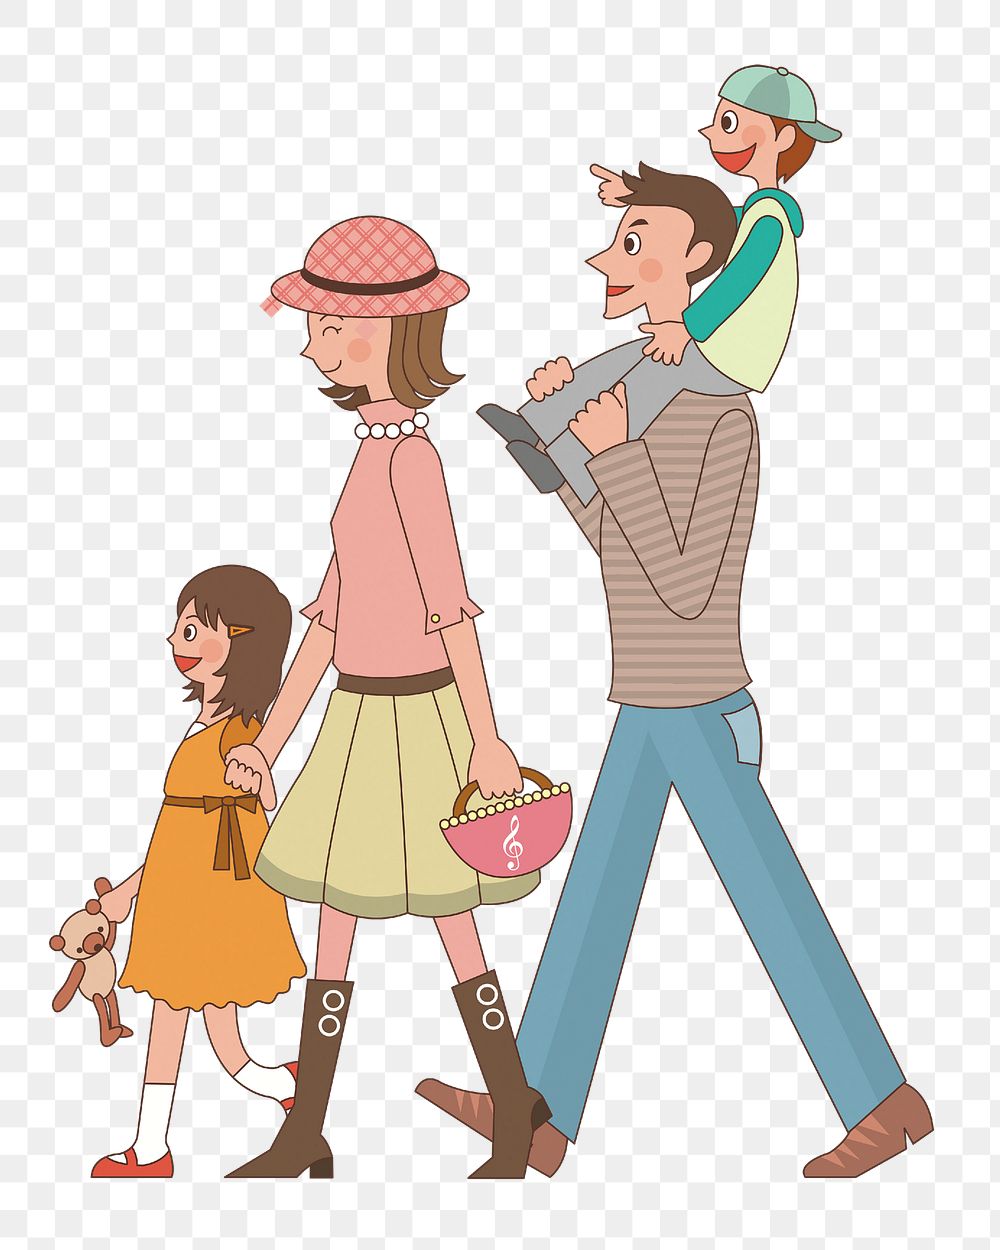 Family walk png illustration, transparent background. Free public domain CC0 image.